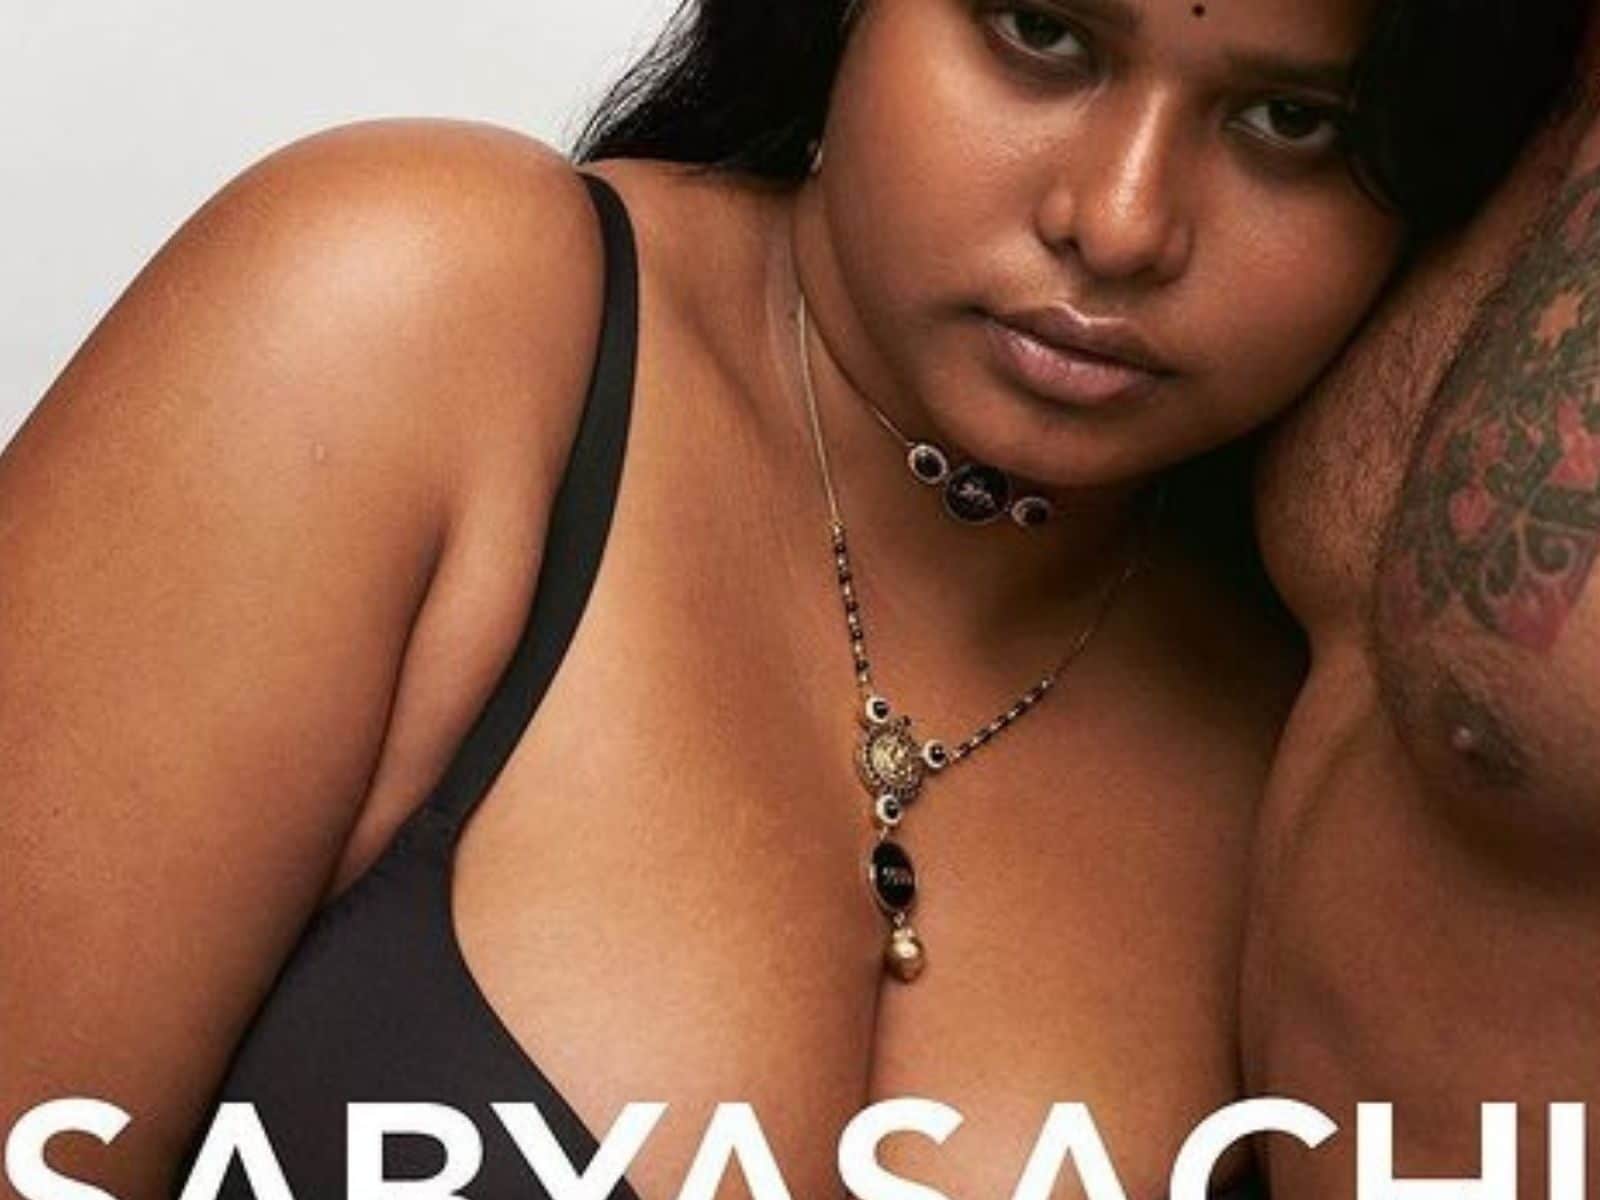 Sex Salman Khan Kajol - Sabyasachi's New Campaign Faces Flak For Featuring Mangalsutra as 'Fashion  Jewellery' - News18